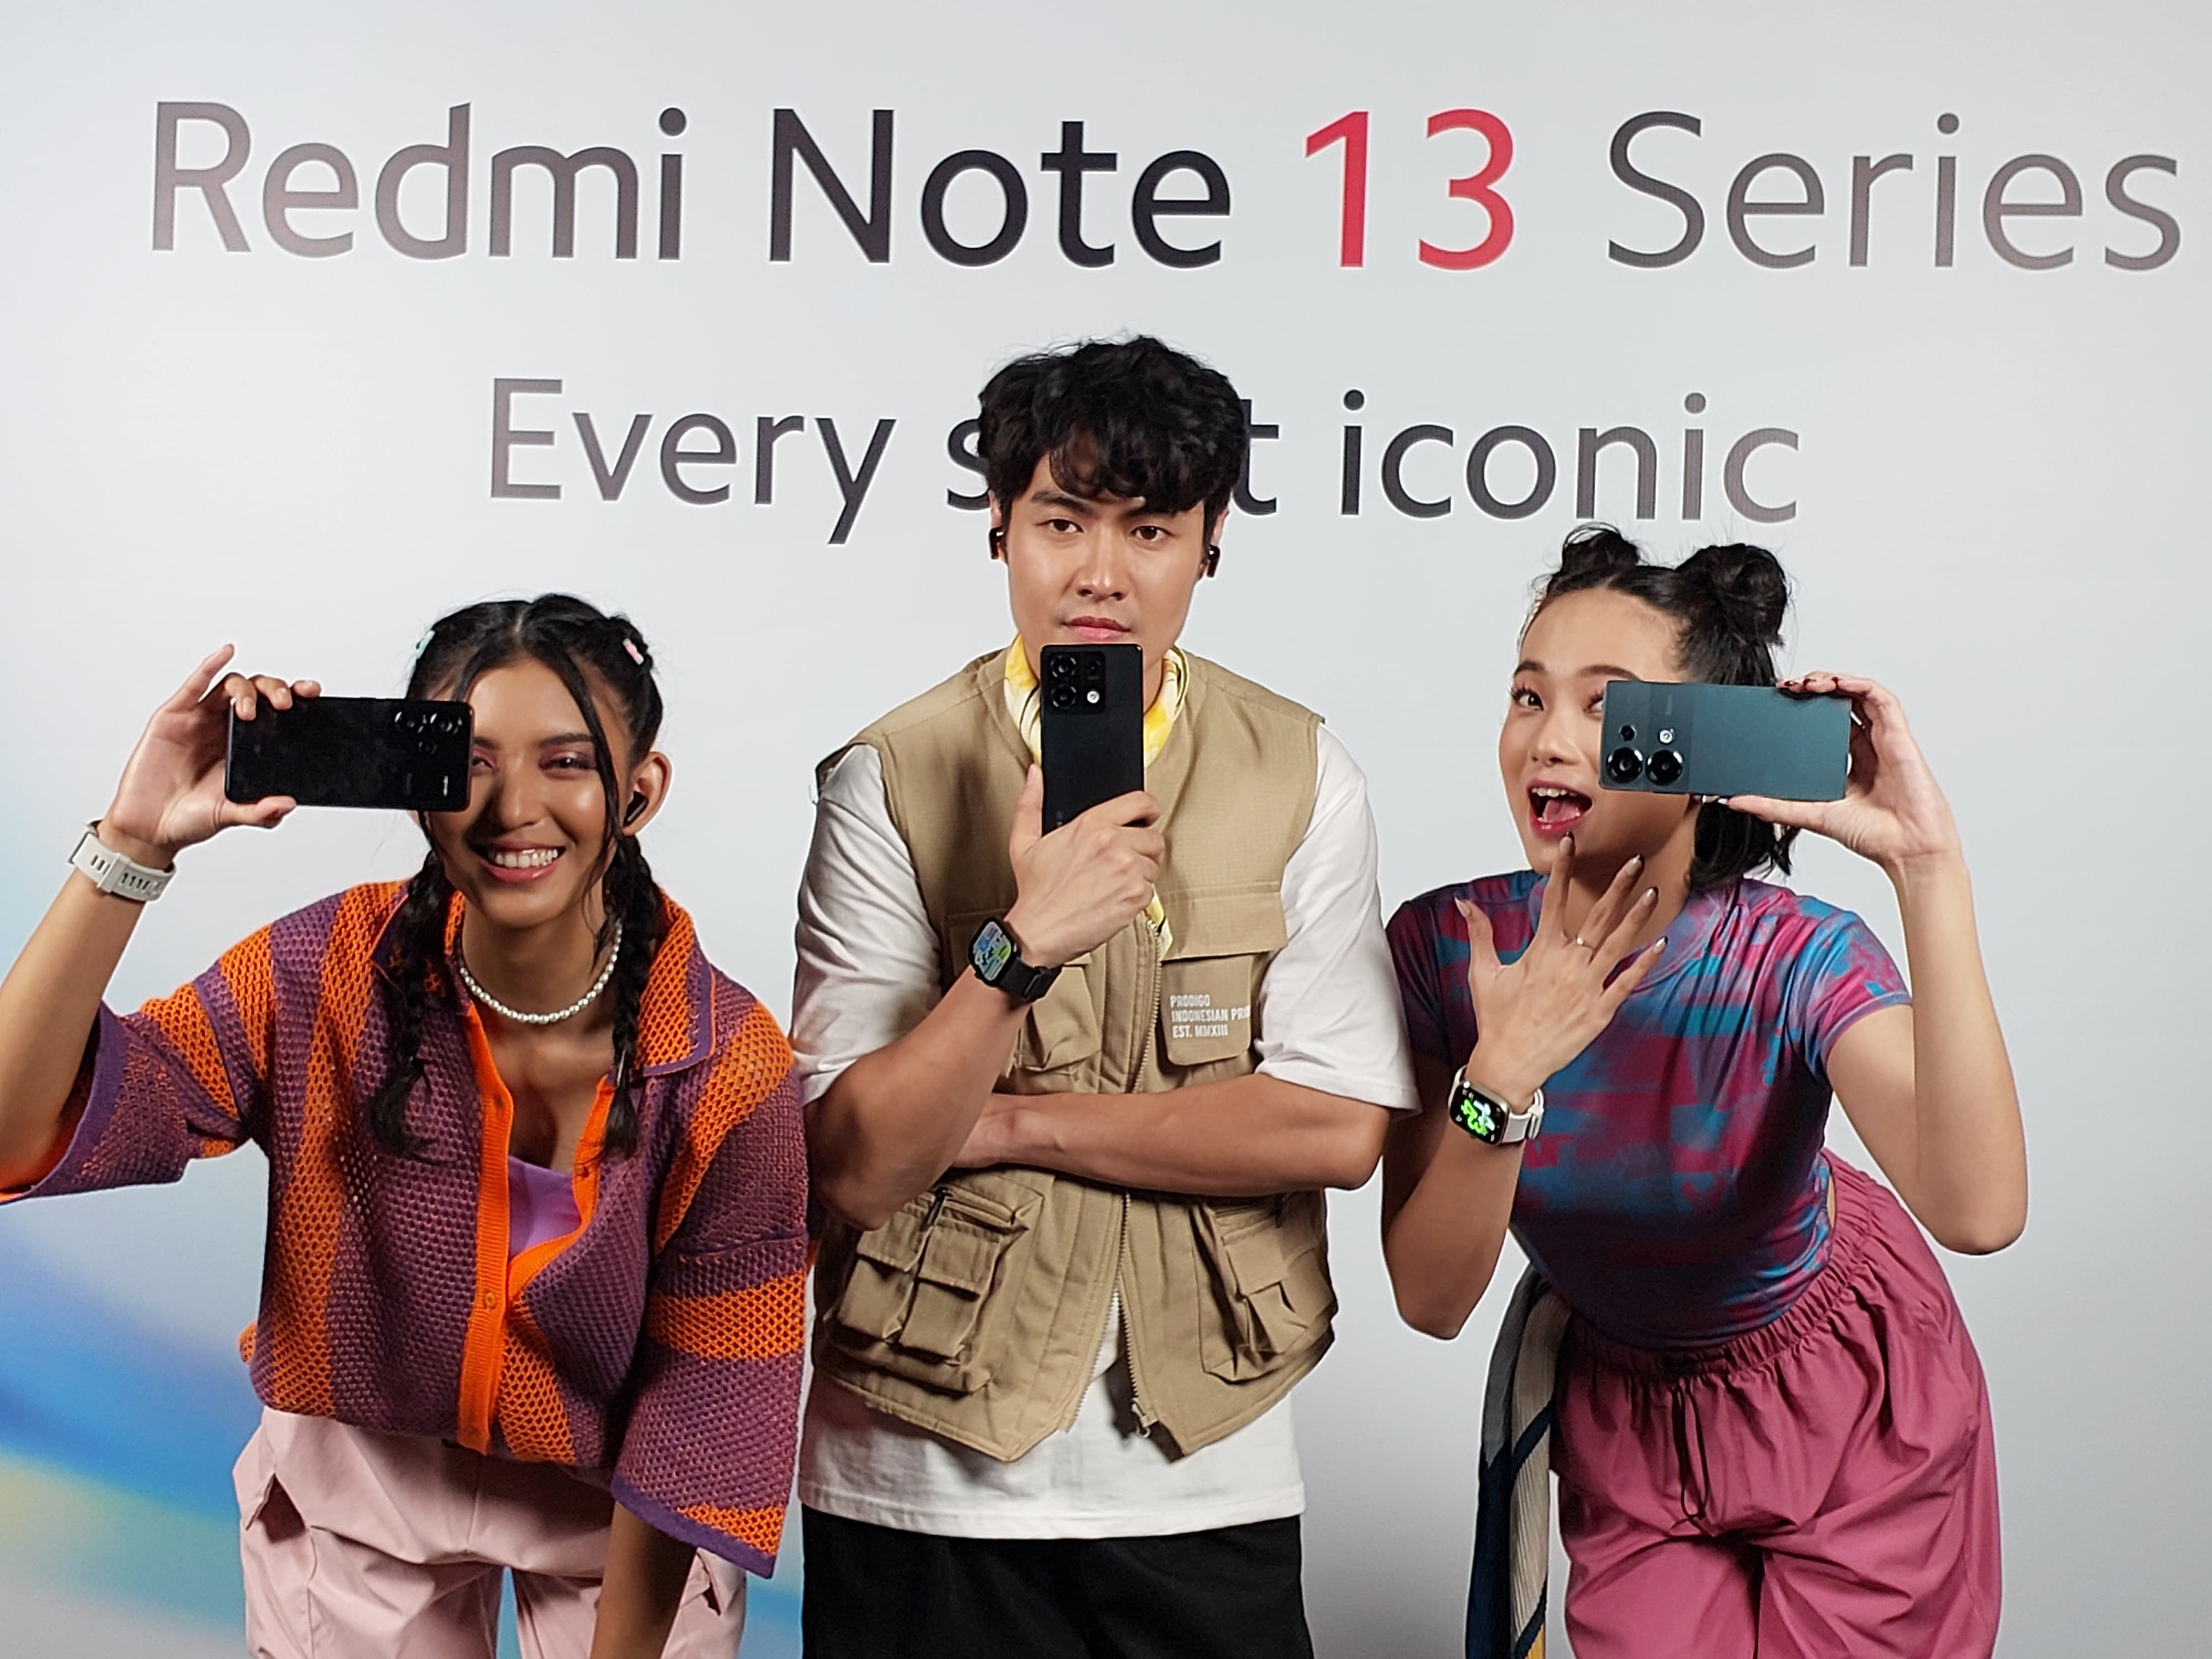 REdmi Note 13 series